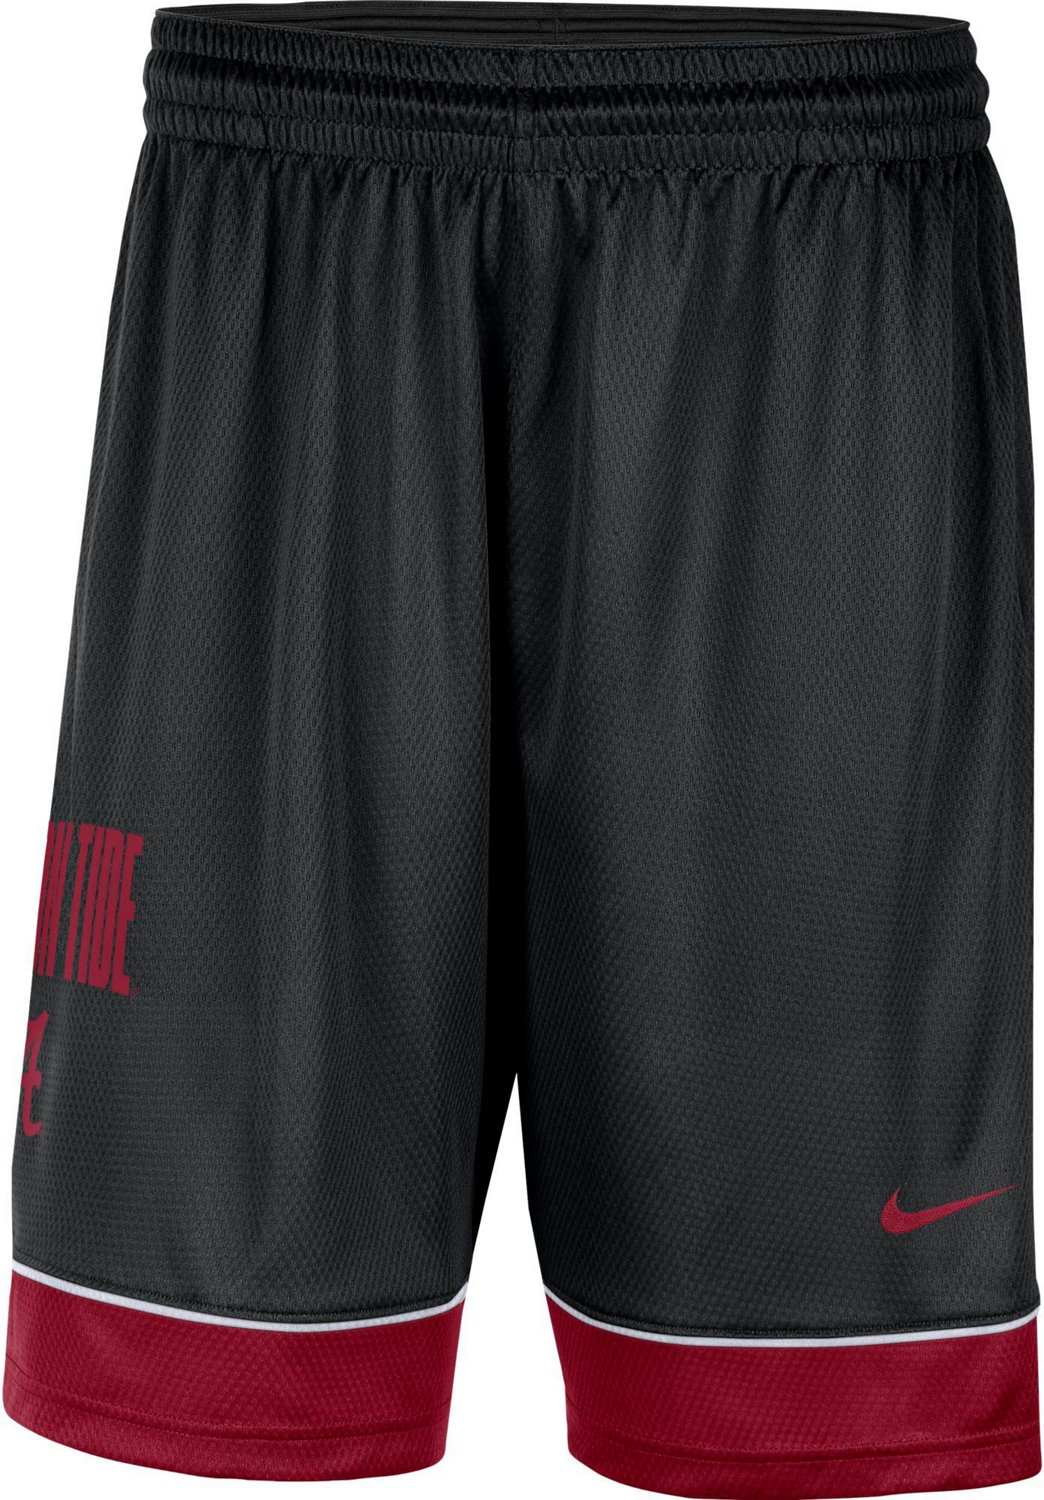 Nike Men's University of Alabama Fast Break Shorts 10 in. | Academy